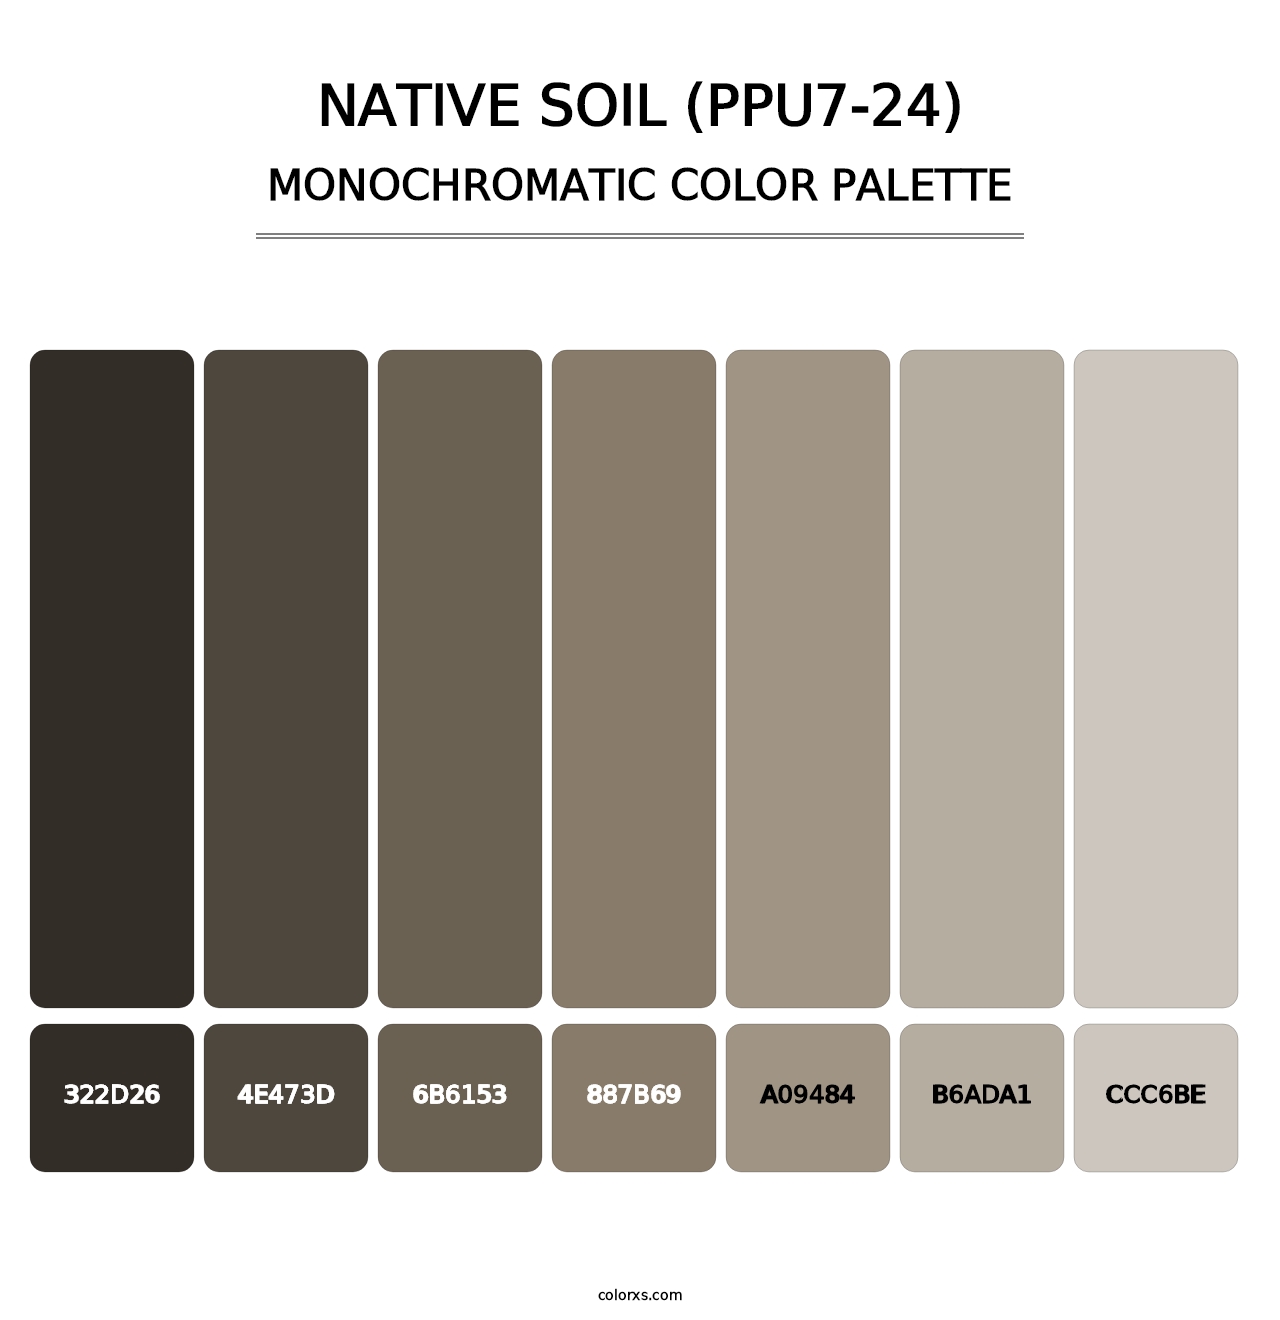 Native Soil (PPU7-24) - Monochromatic Color Palette